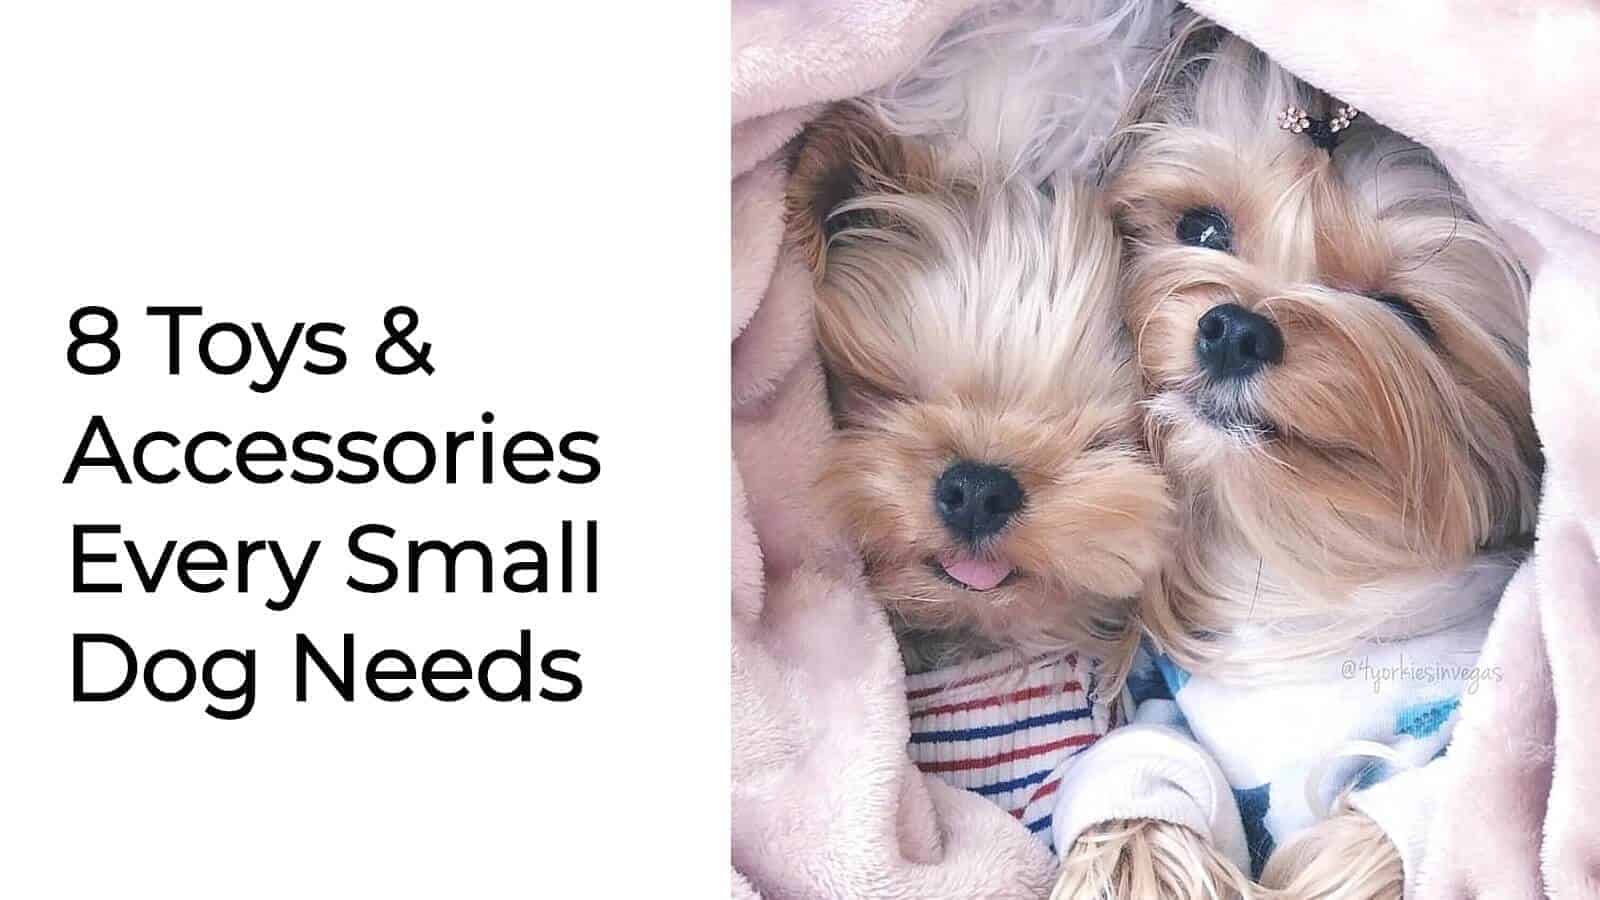 https://yorkies.b-cdn.net/wp-content/uploads/2020/10/8-Toys-Accessories-Every-Small-Dog-Needs-1.jpg